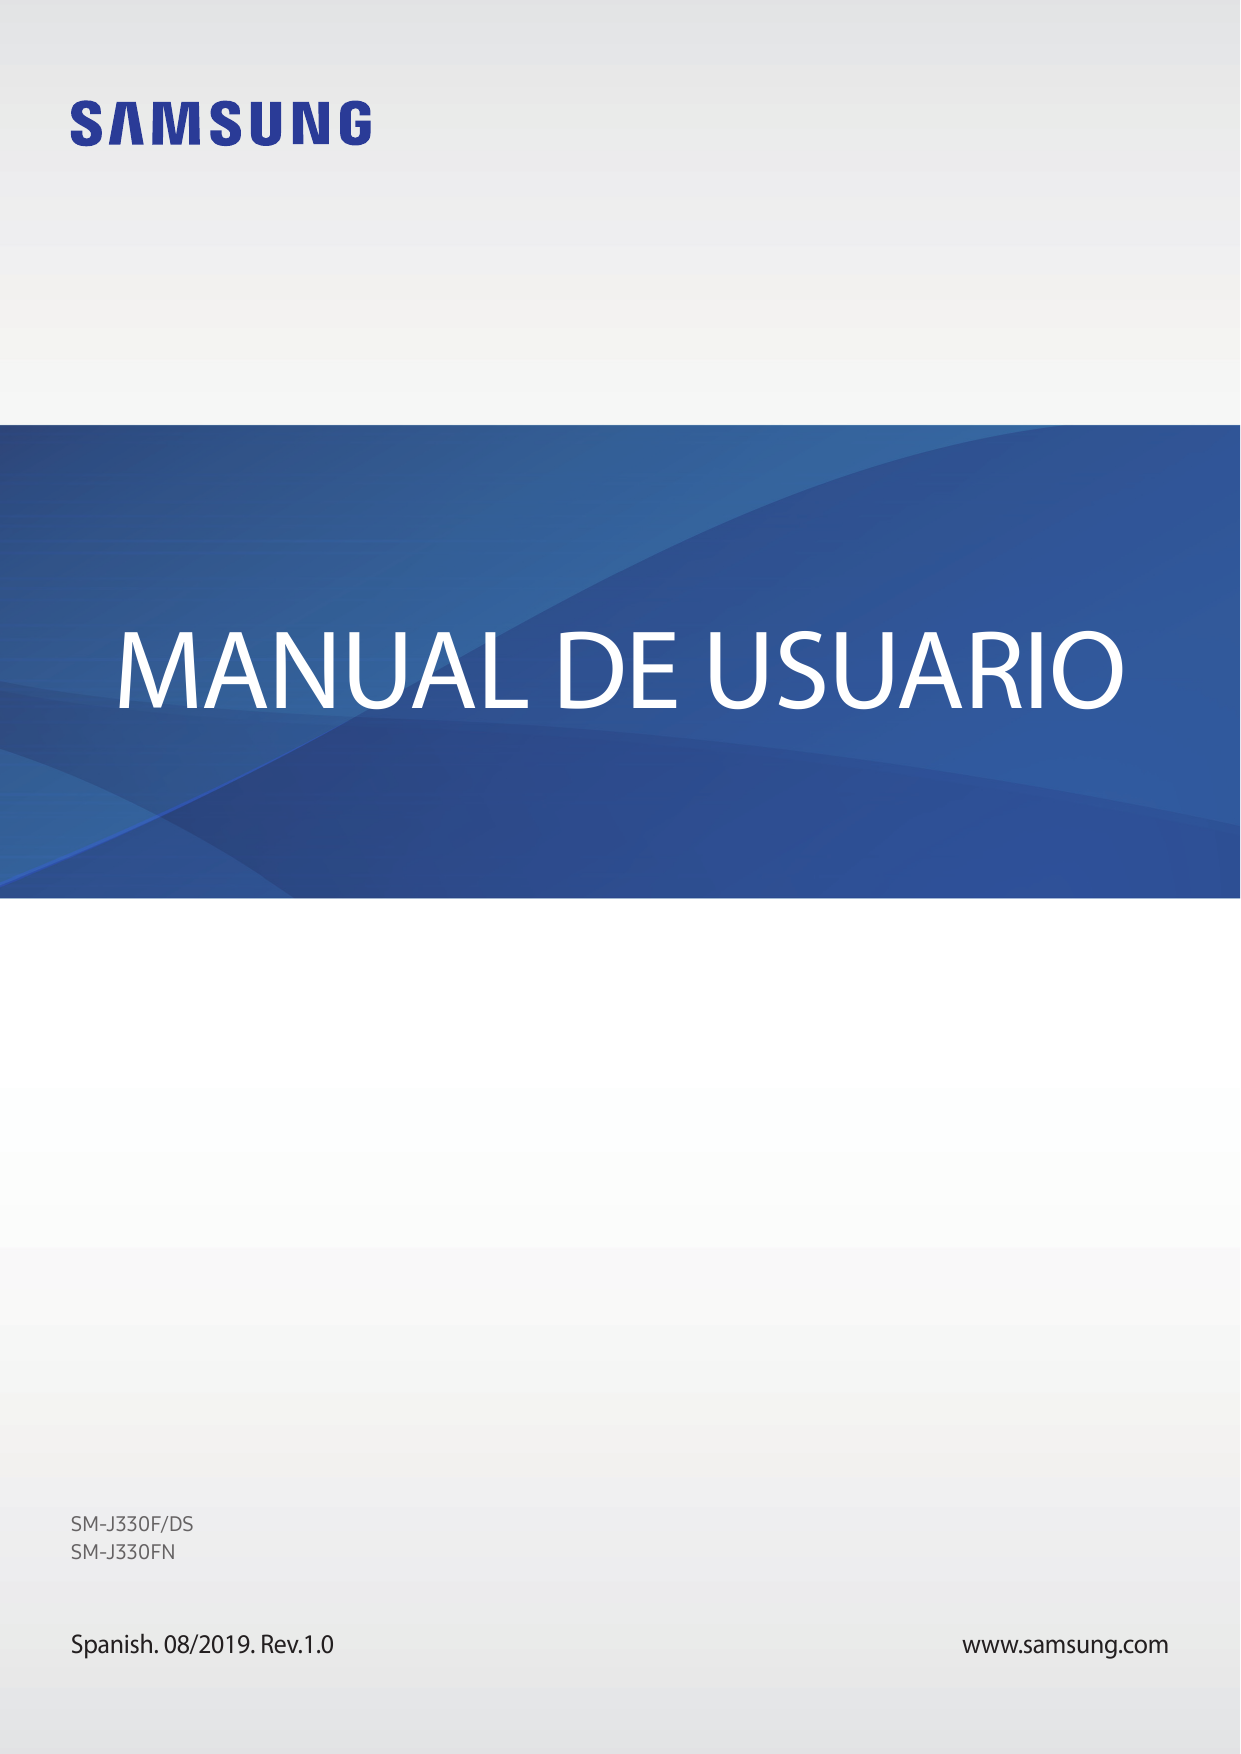 MANUAL DE USUARIOSM-J330F/DSSM-J330FNSpanish. 08/2019. Rev.1.0www.samsung.com